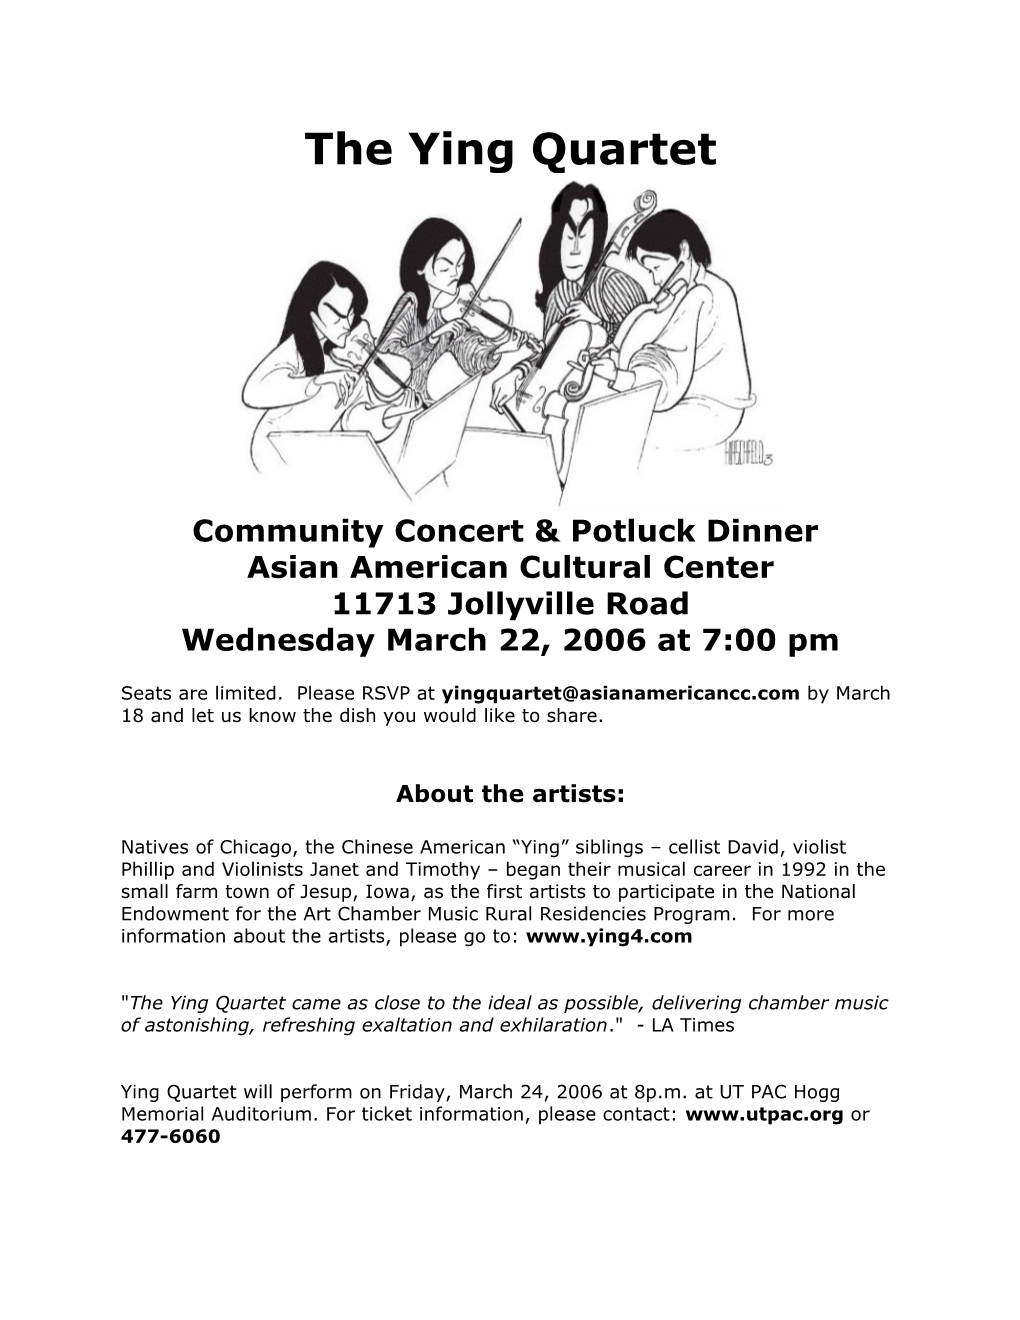 Community Concert & Potluck Dinner